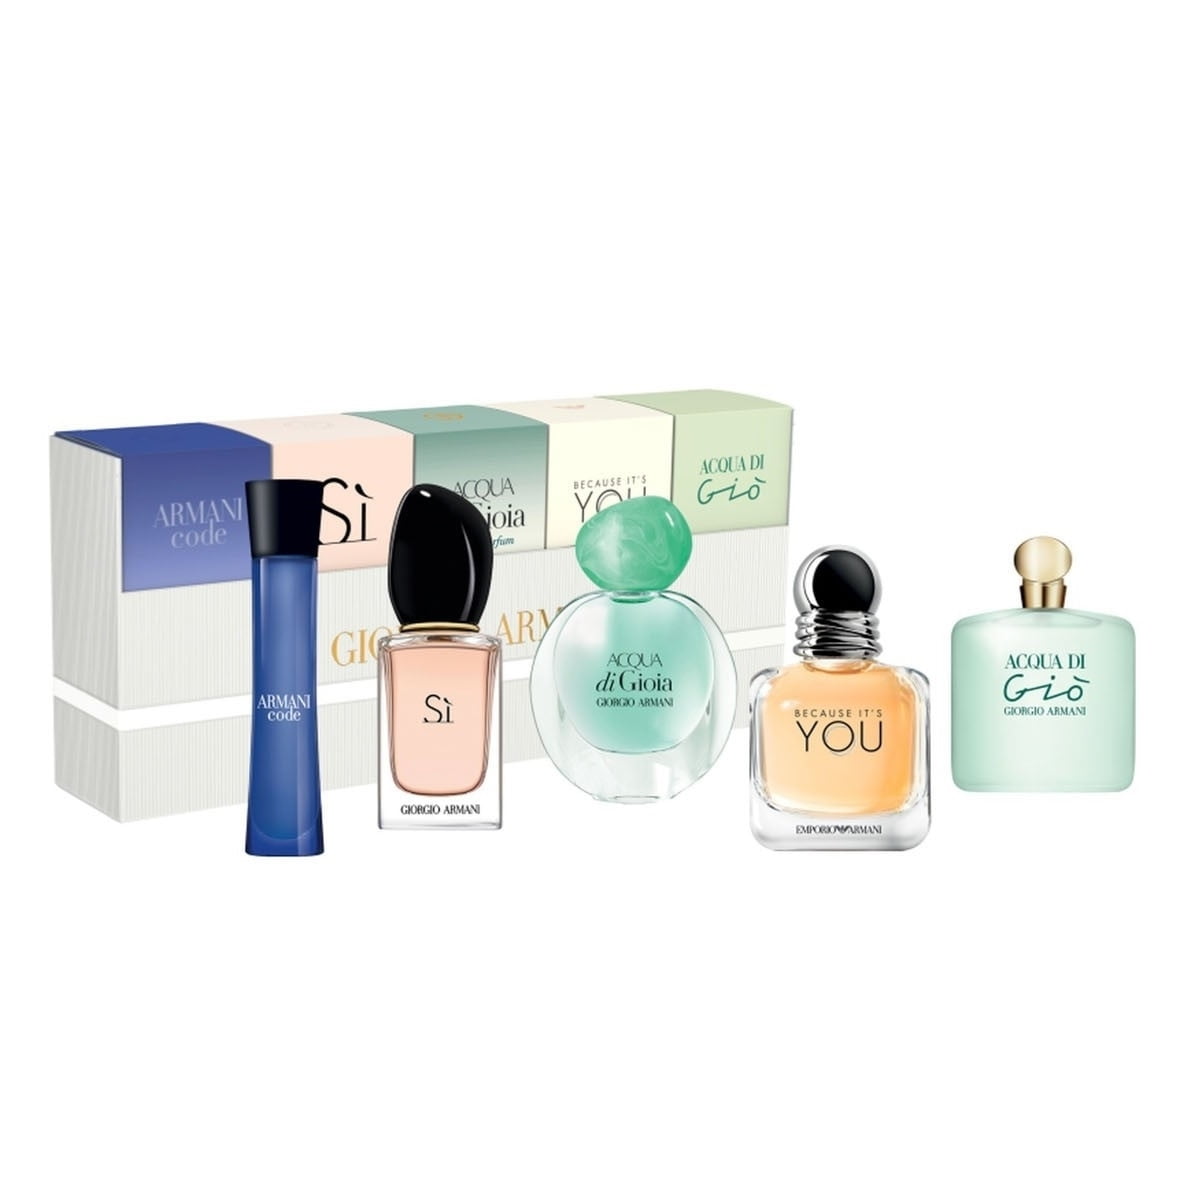 GIORGIO ARMANI Code EdT Set 140ml - Perfume Gift Set | Alza.cz